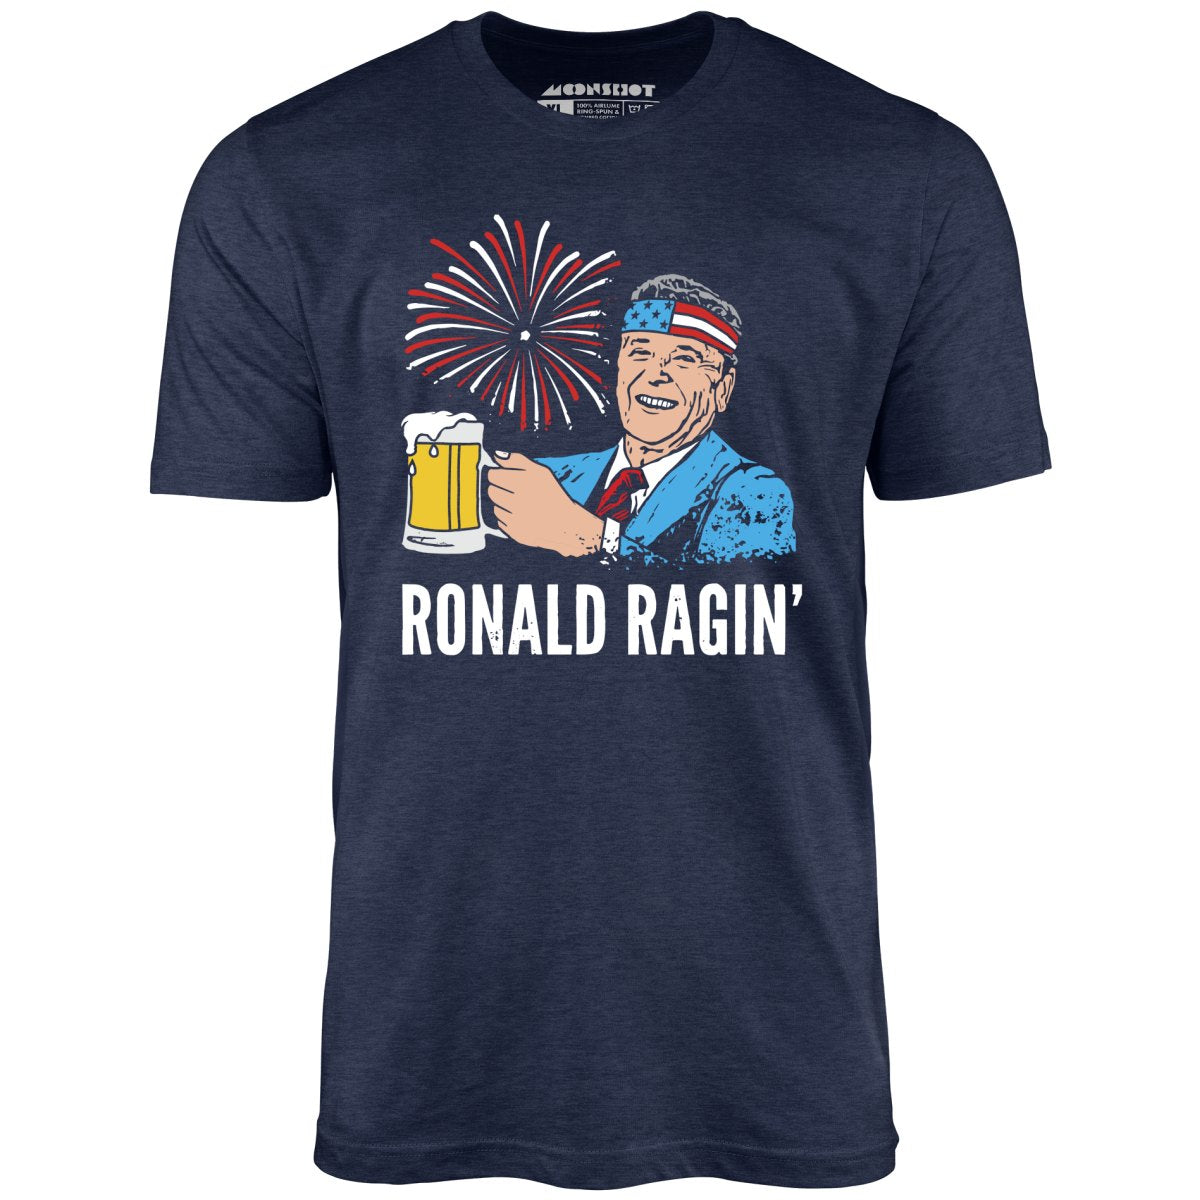 Ronald Ragin' - Unisex T-Shirt